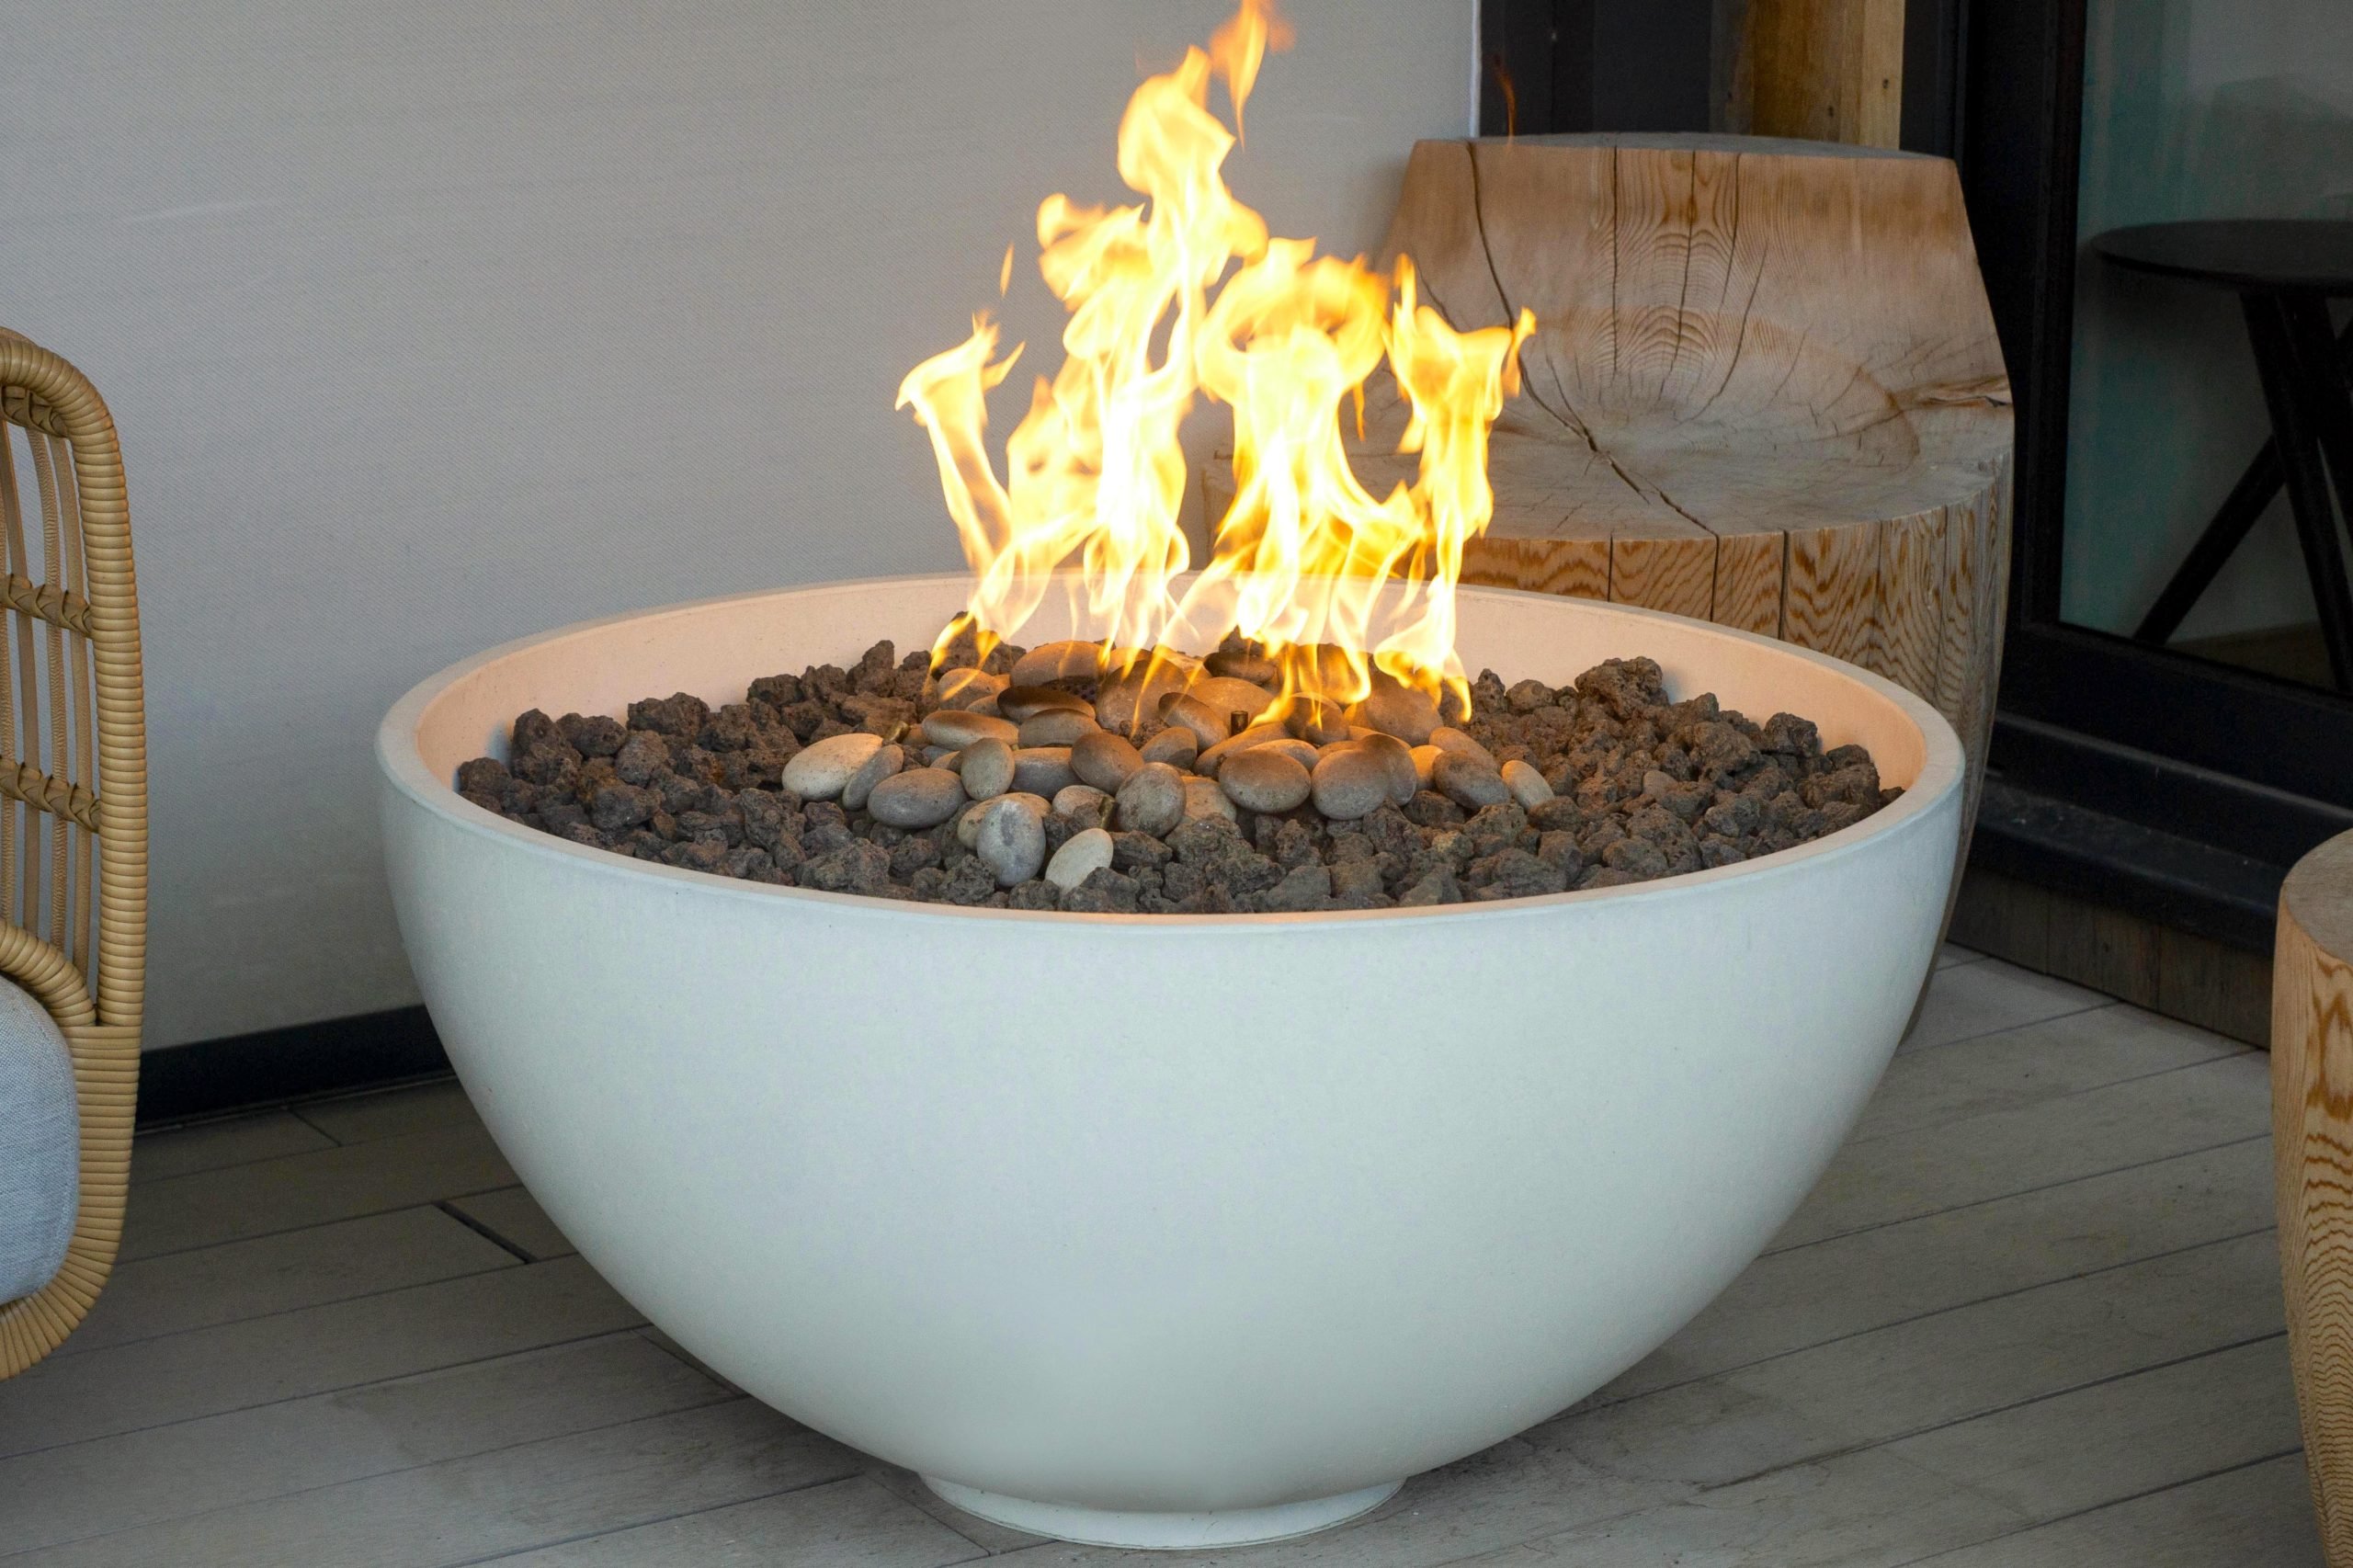 Hemi gas and propane fire pit/fire bowl